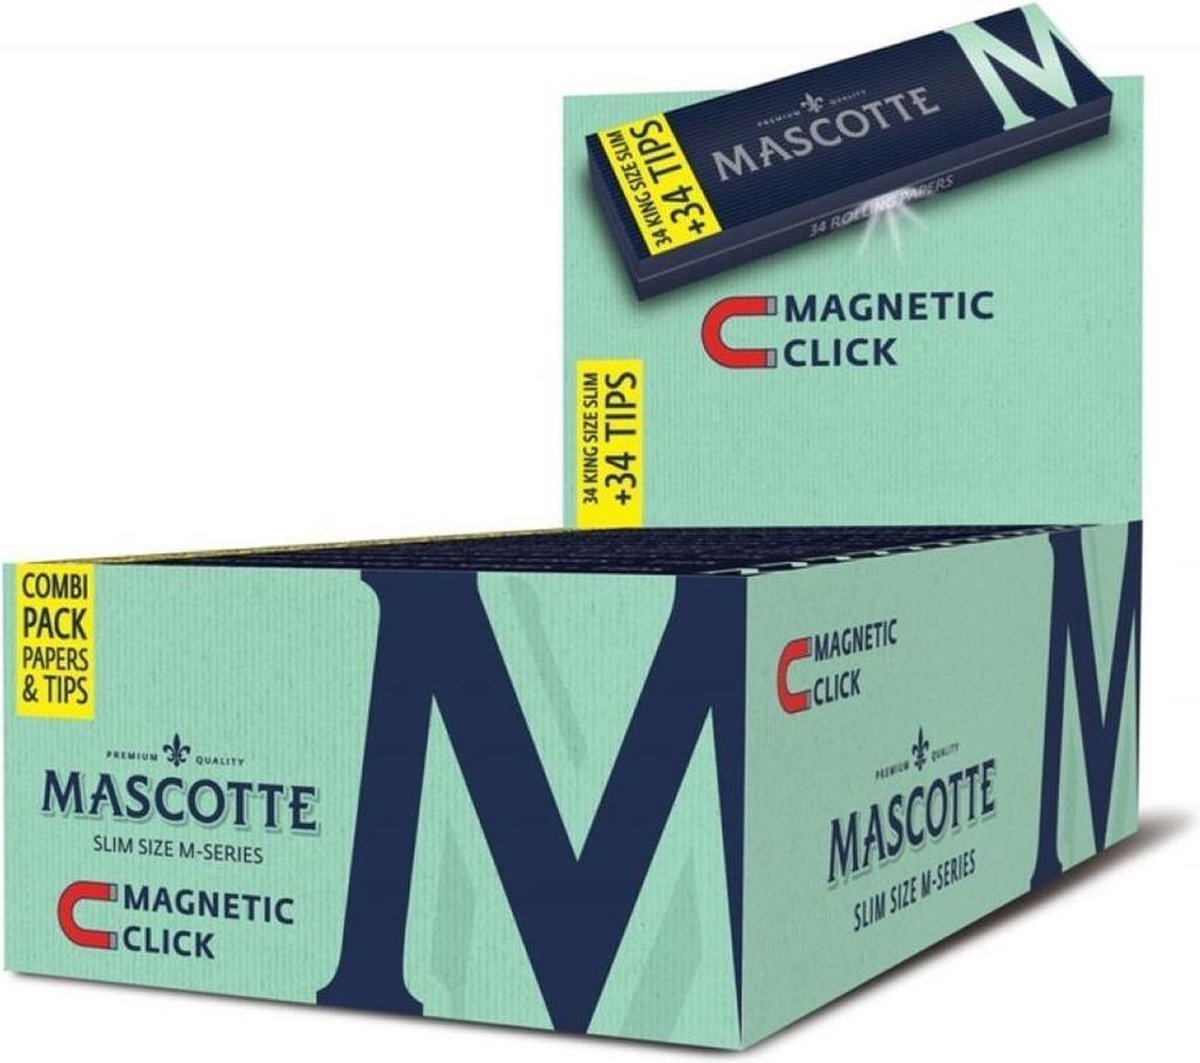 Mascotte Original Combi (Slim Size with magnet NL)